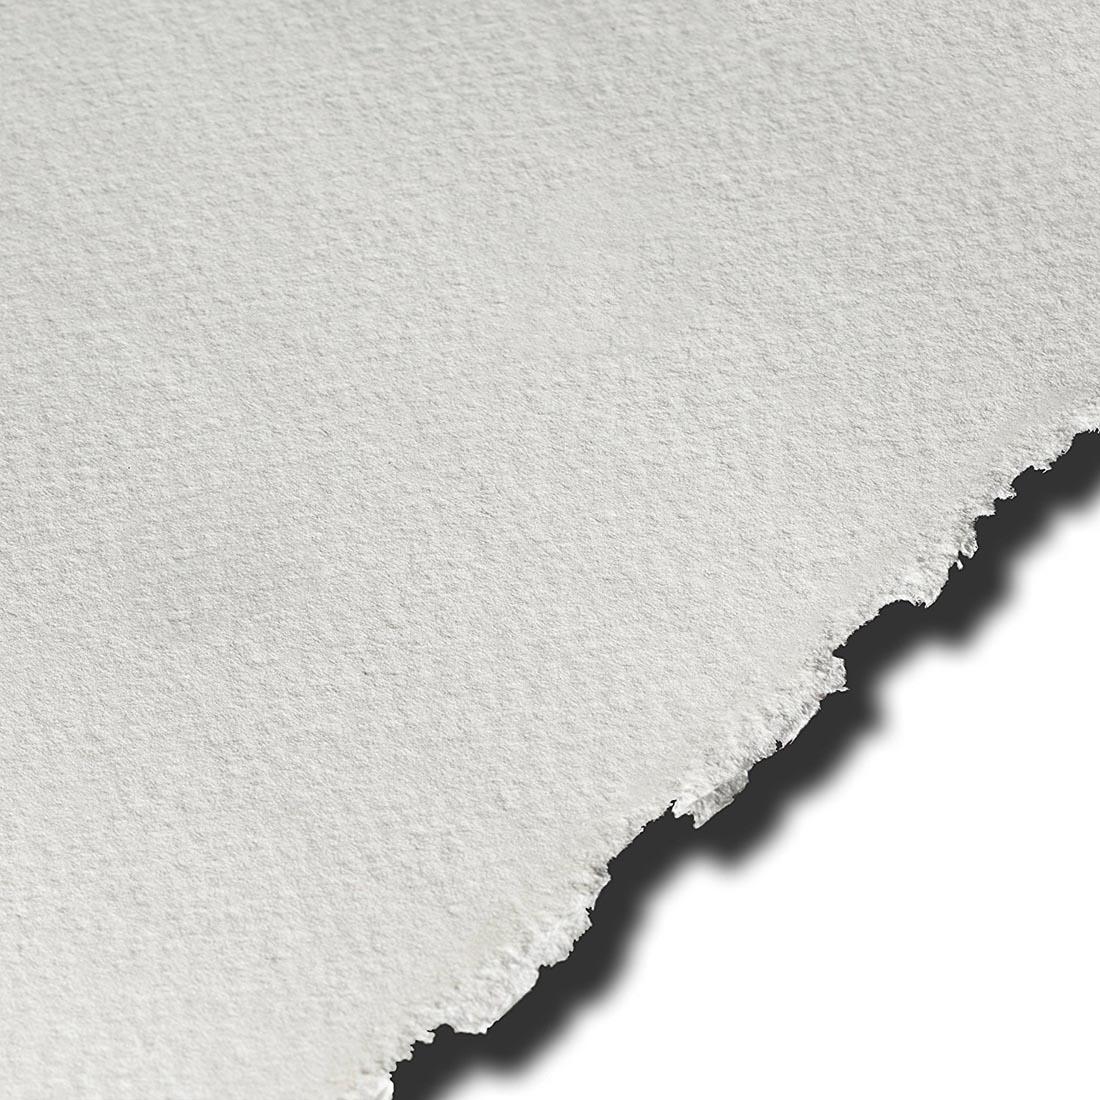 Deckled Edge of White Stonehenge Paper